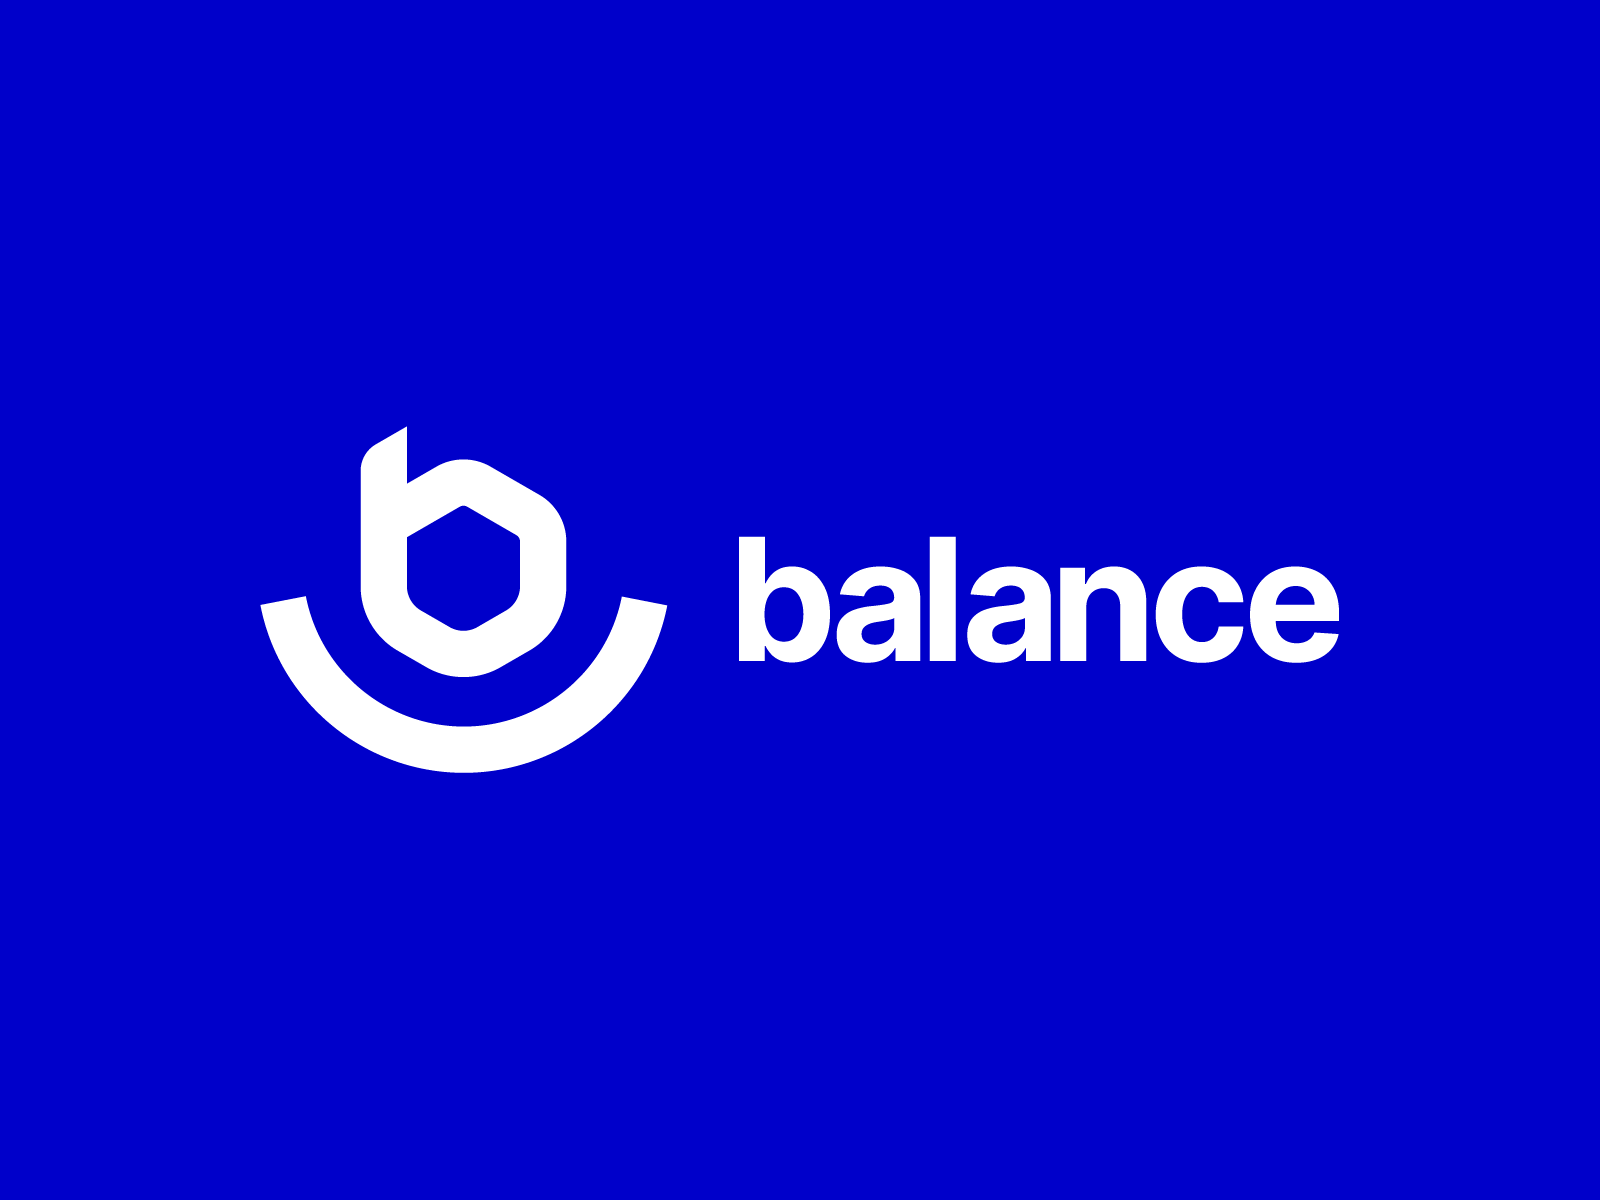 Balance - Logo design by Matt Vancoillie on Dribbble